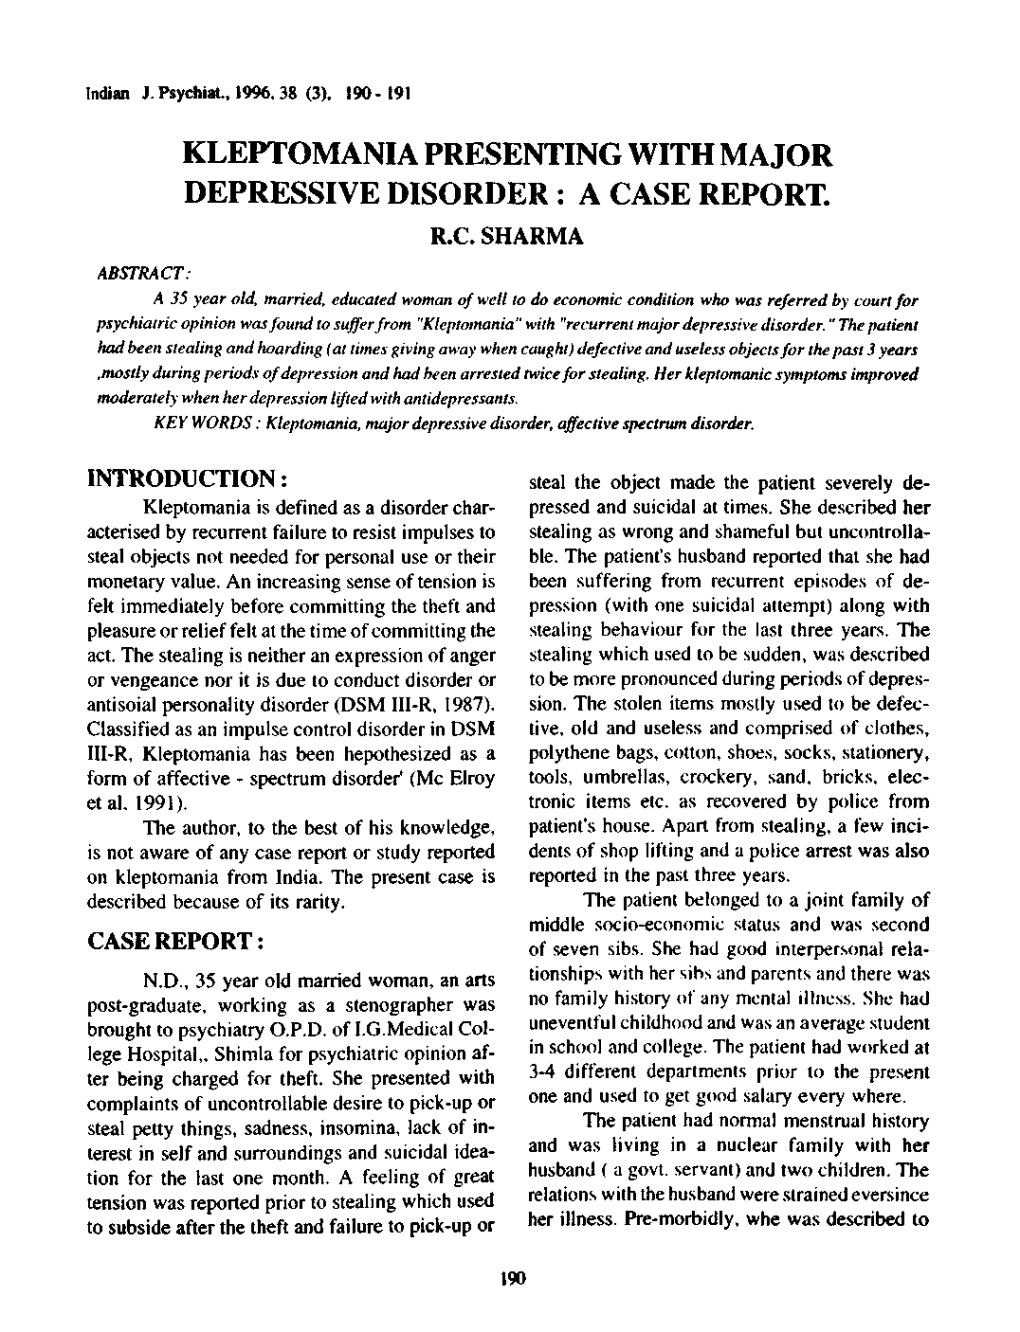 Kleptomania Presenting with Major Depressive Disorder : a Case Report